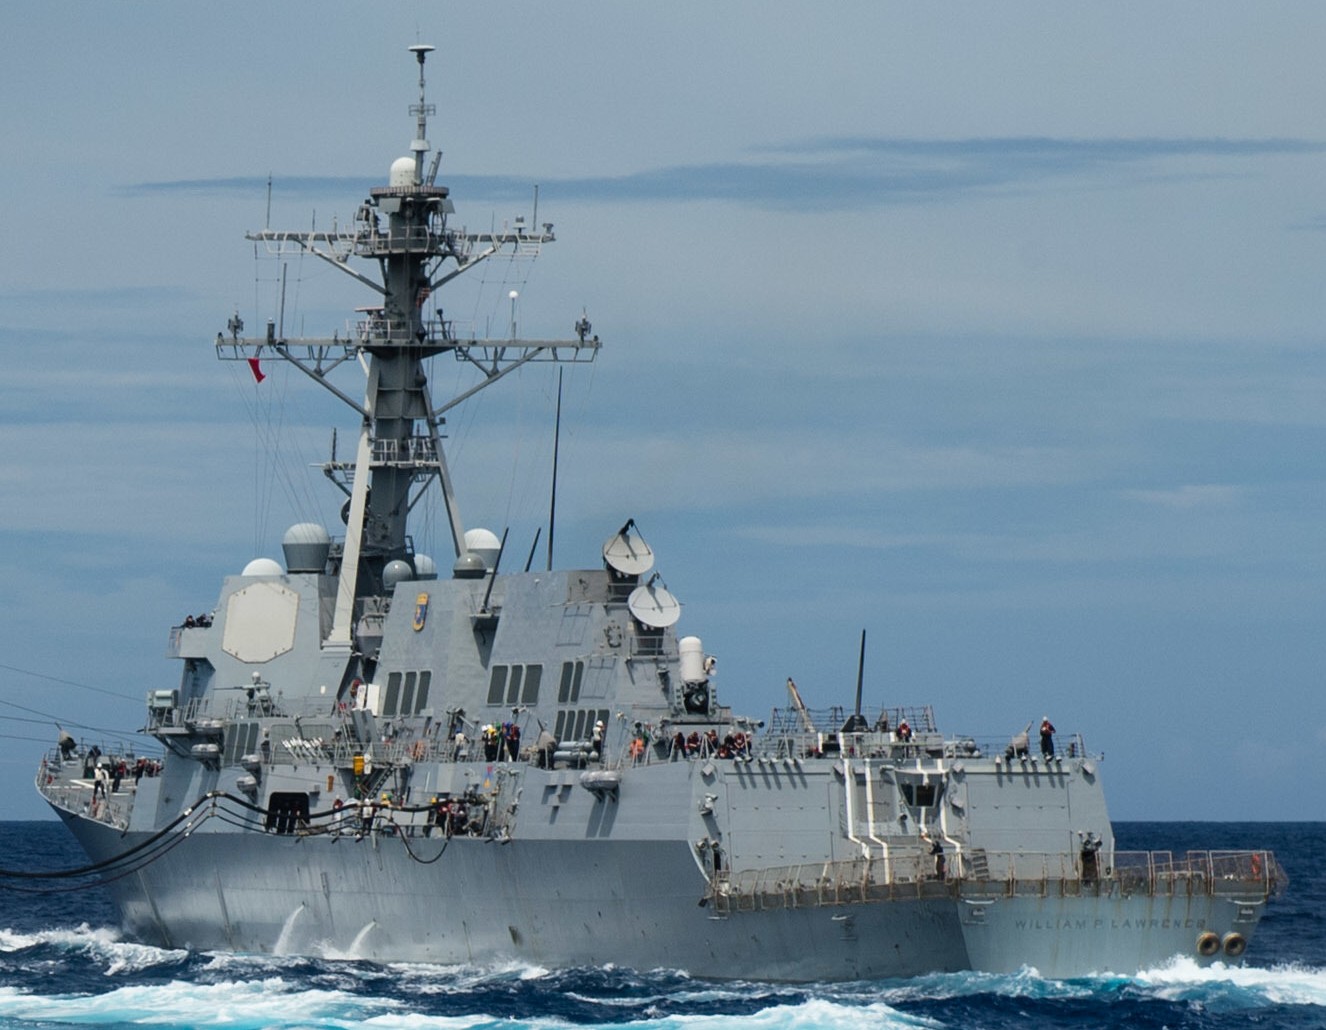 ddg-106 uss stockdale arleigh burke class guided missile destroyer aegis us navy philippine sea 89